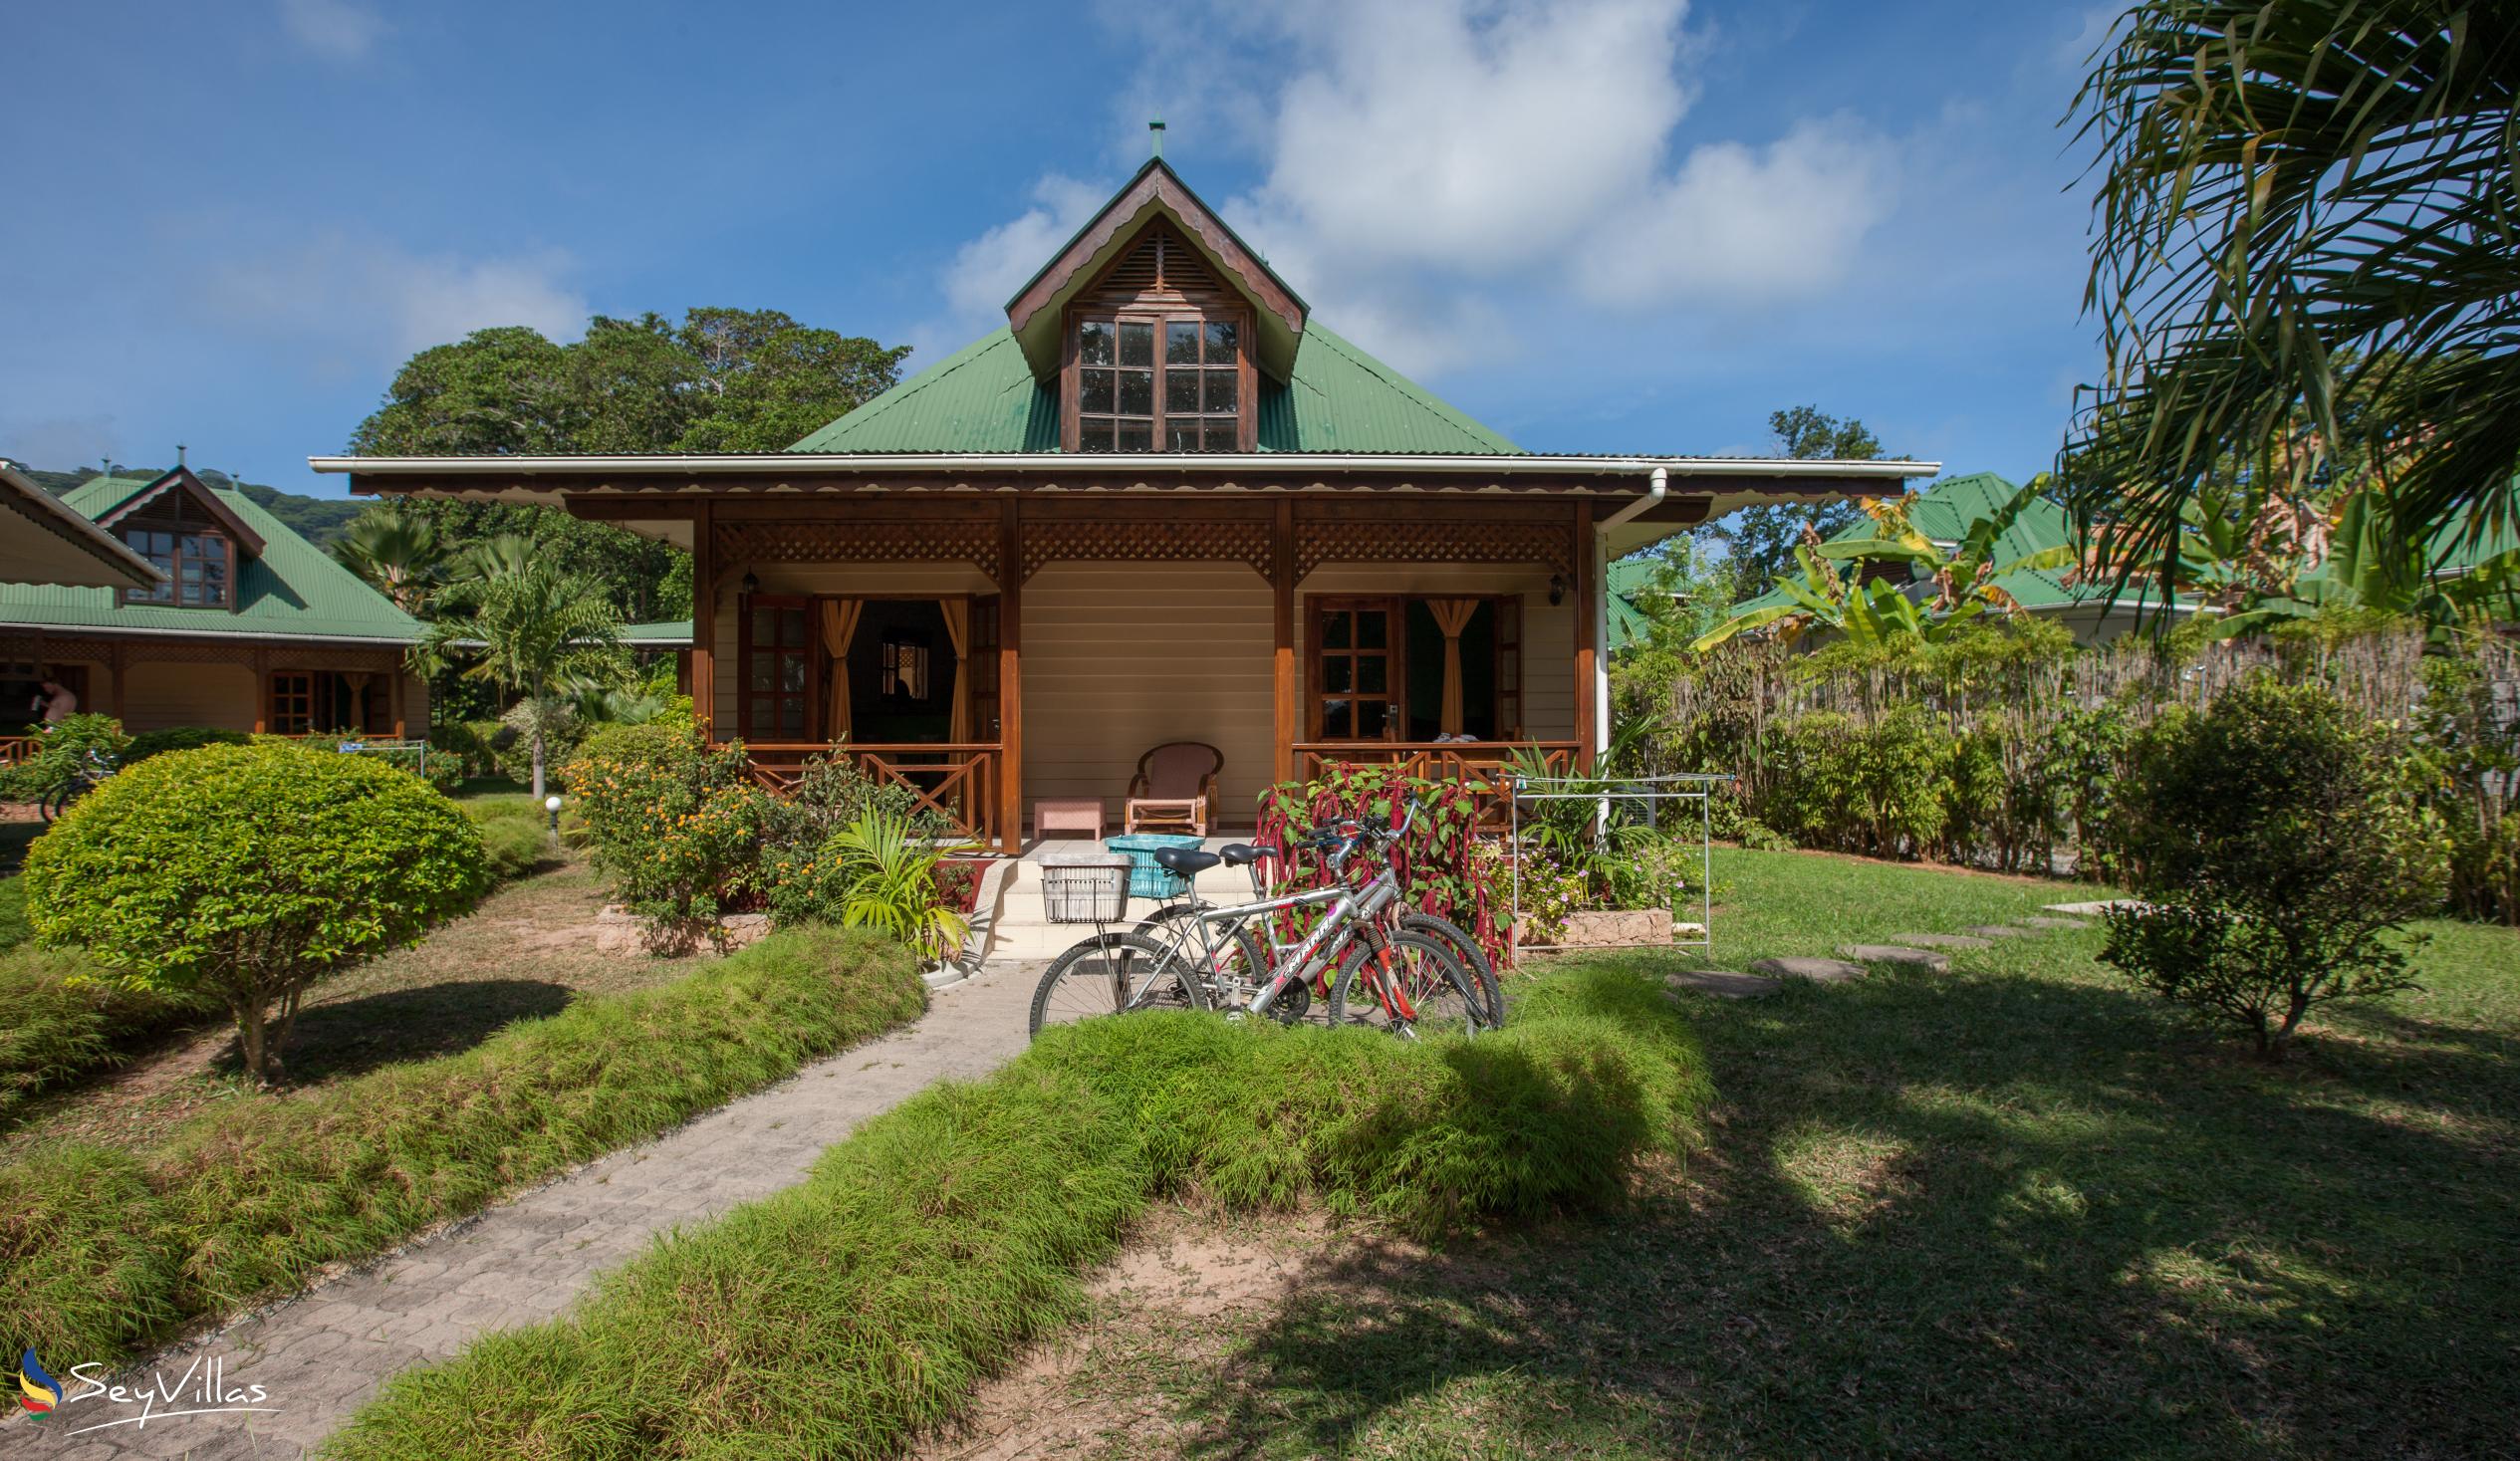 Foto 5: Villa Creole - Aussenbereich - La Digue (Seychellen)